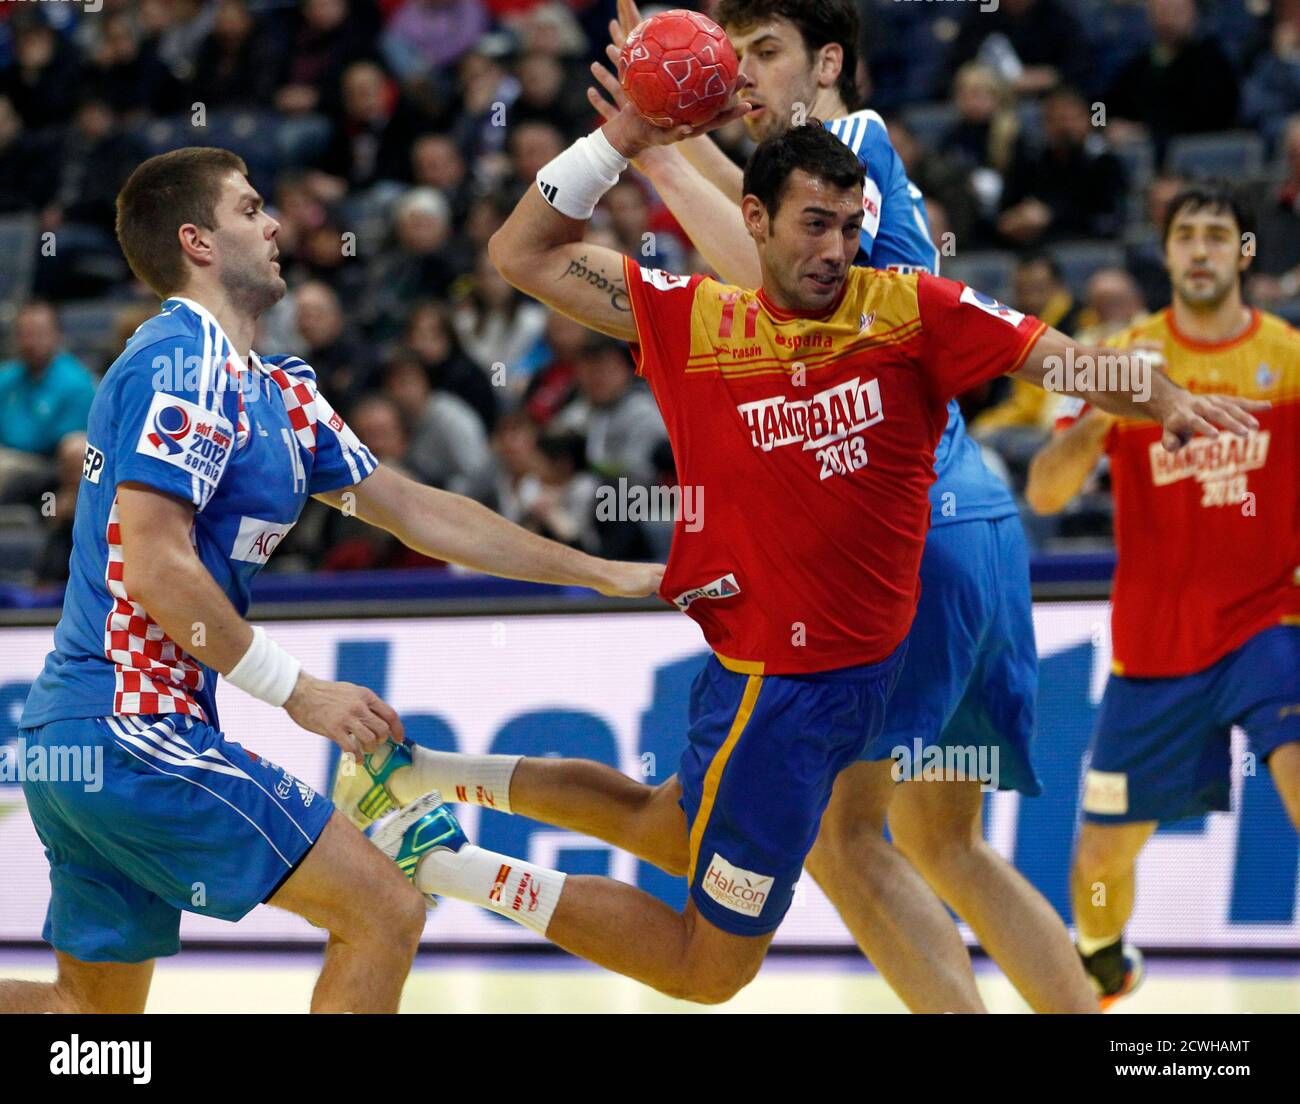 Spain's Daniel Sarmiento (C) attempts to score between Croatia's Drago  Vukovic (L) and Marko Kopljar (R) during their men's European Handball  Championship match for the third place in Belgrade January 29, 2012.